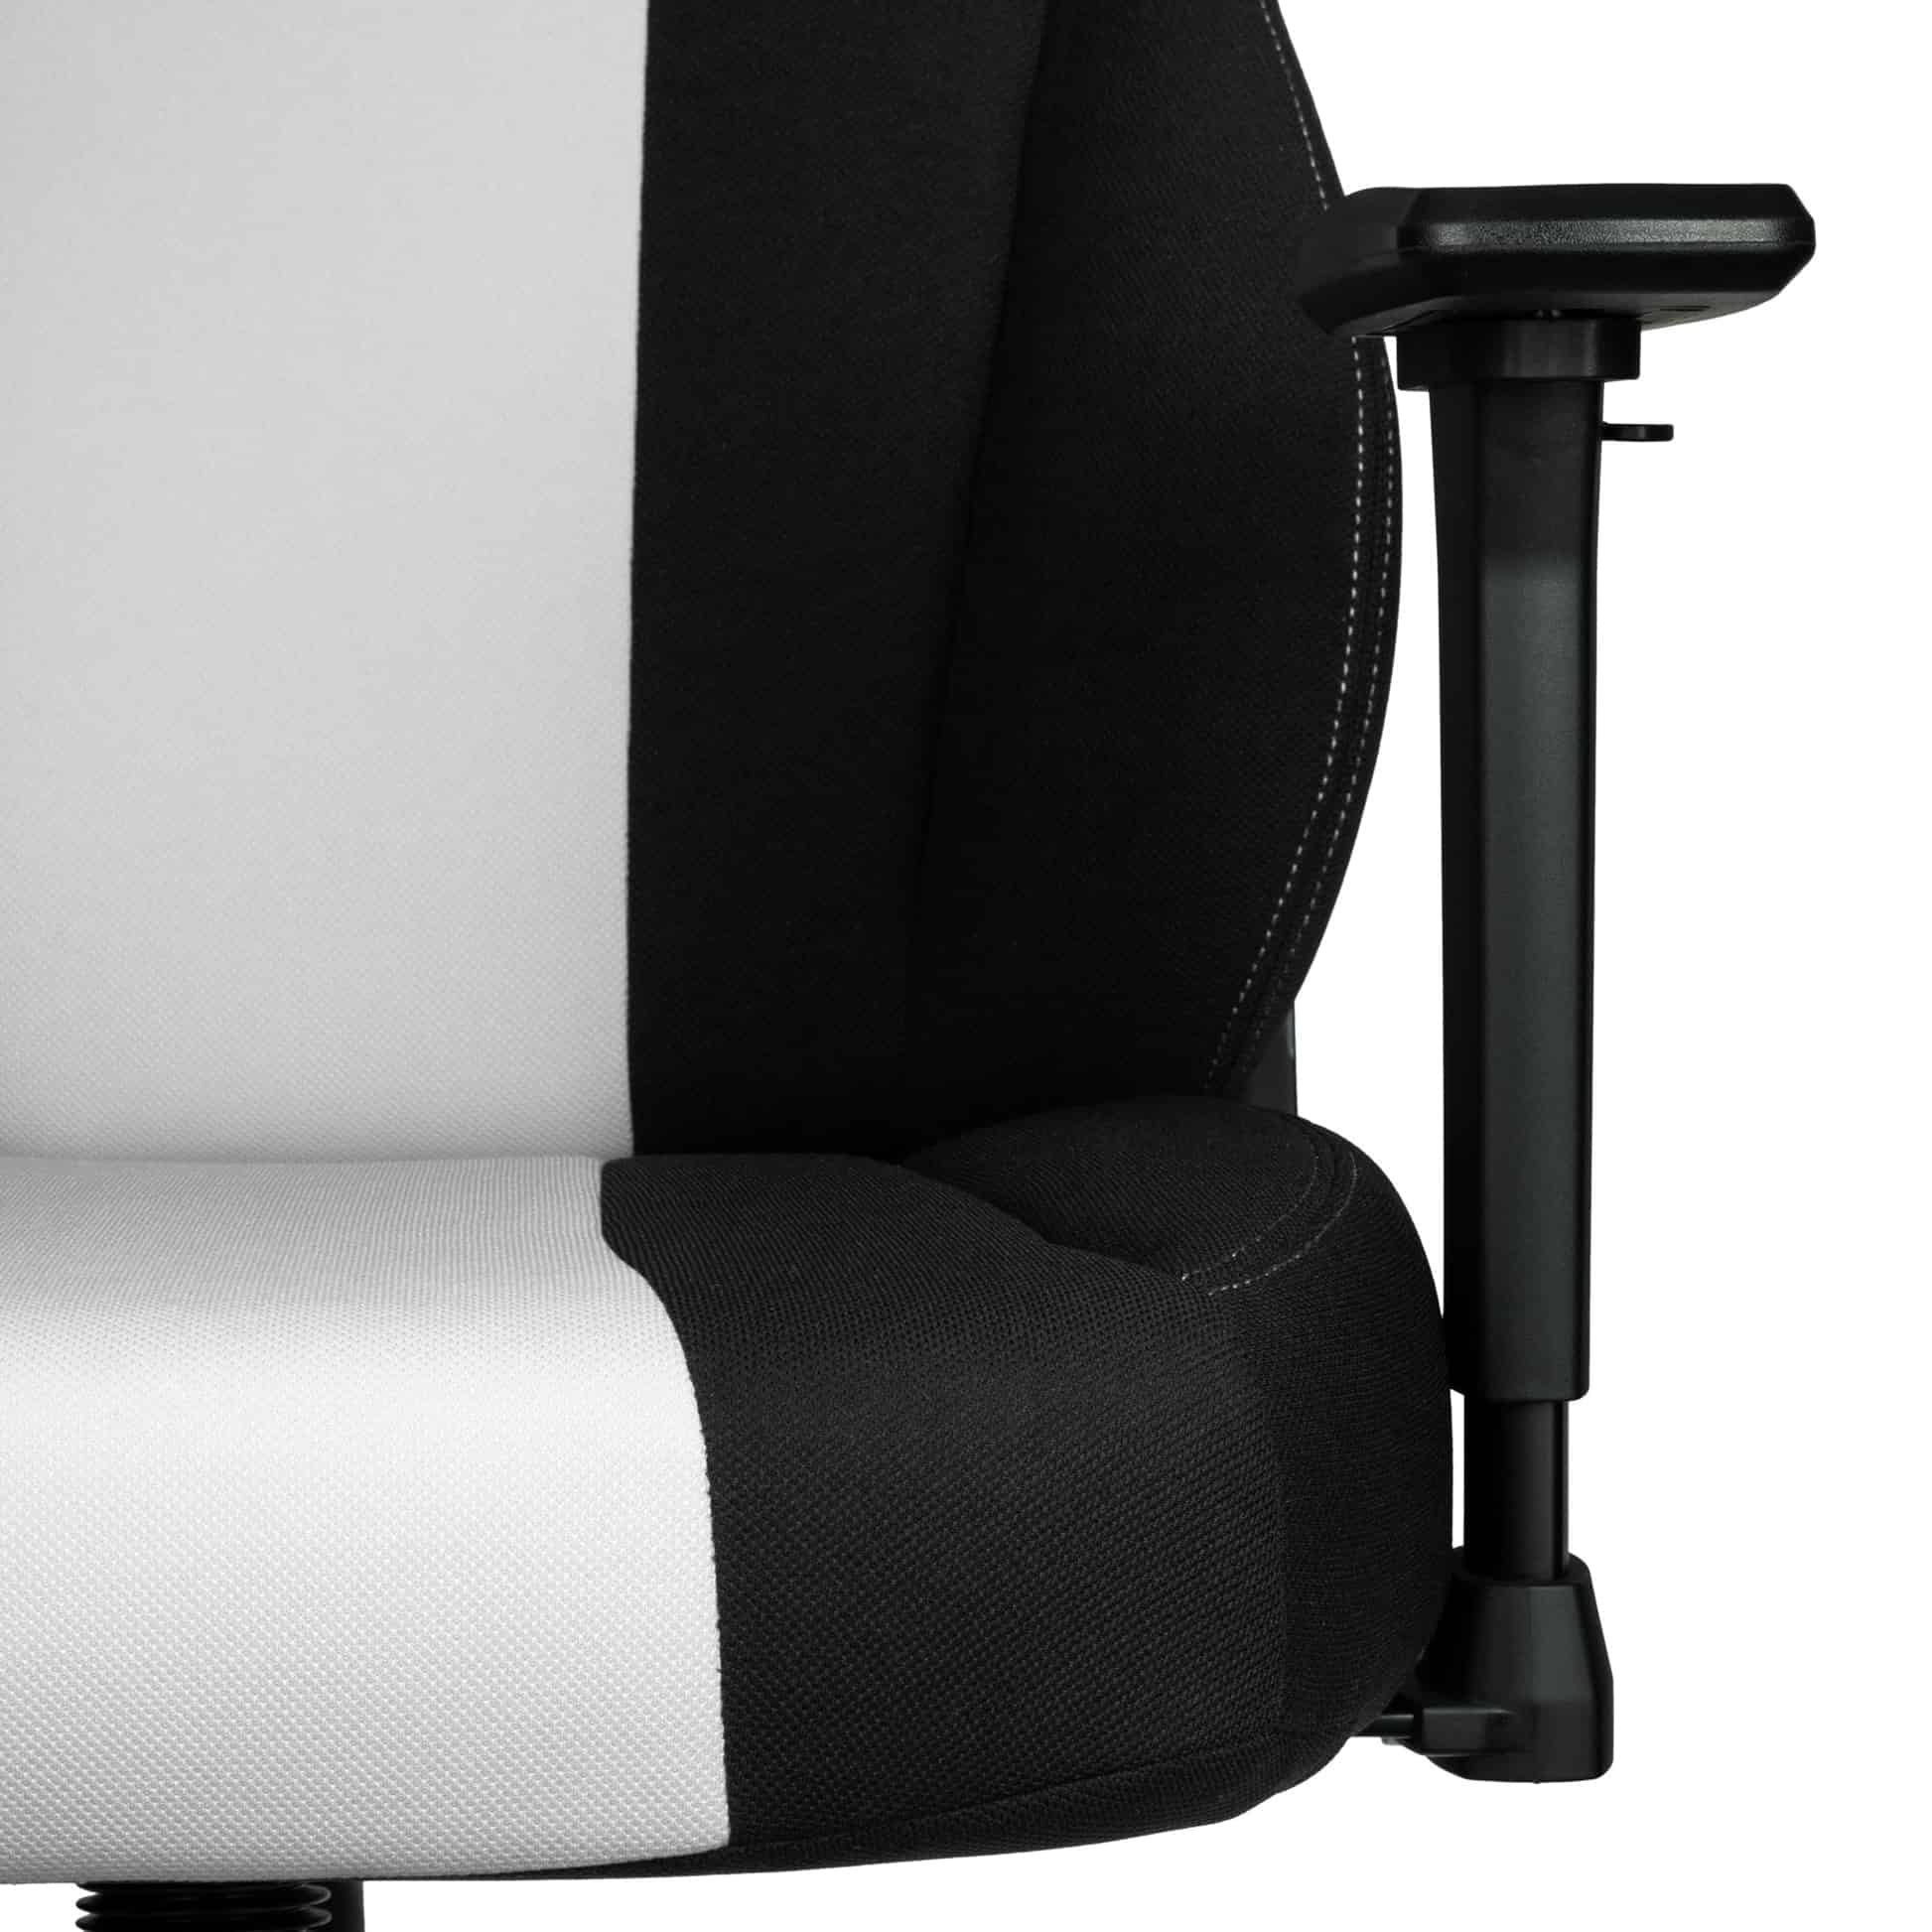 Gamer szék Nitro Concepts E250 Fekete/fehér Radiant White